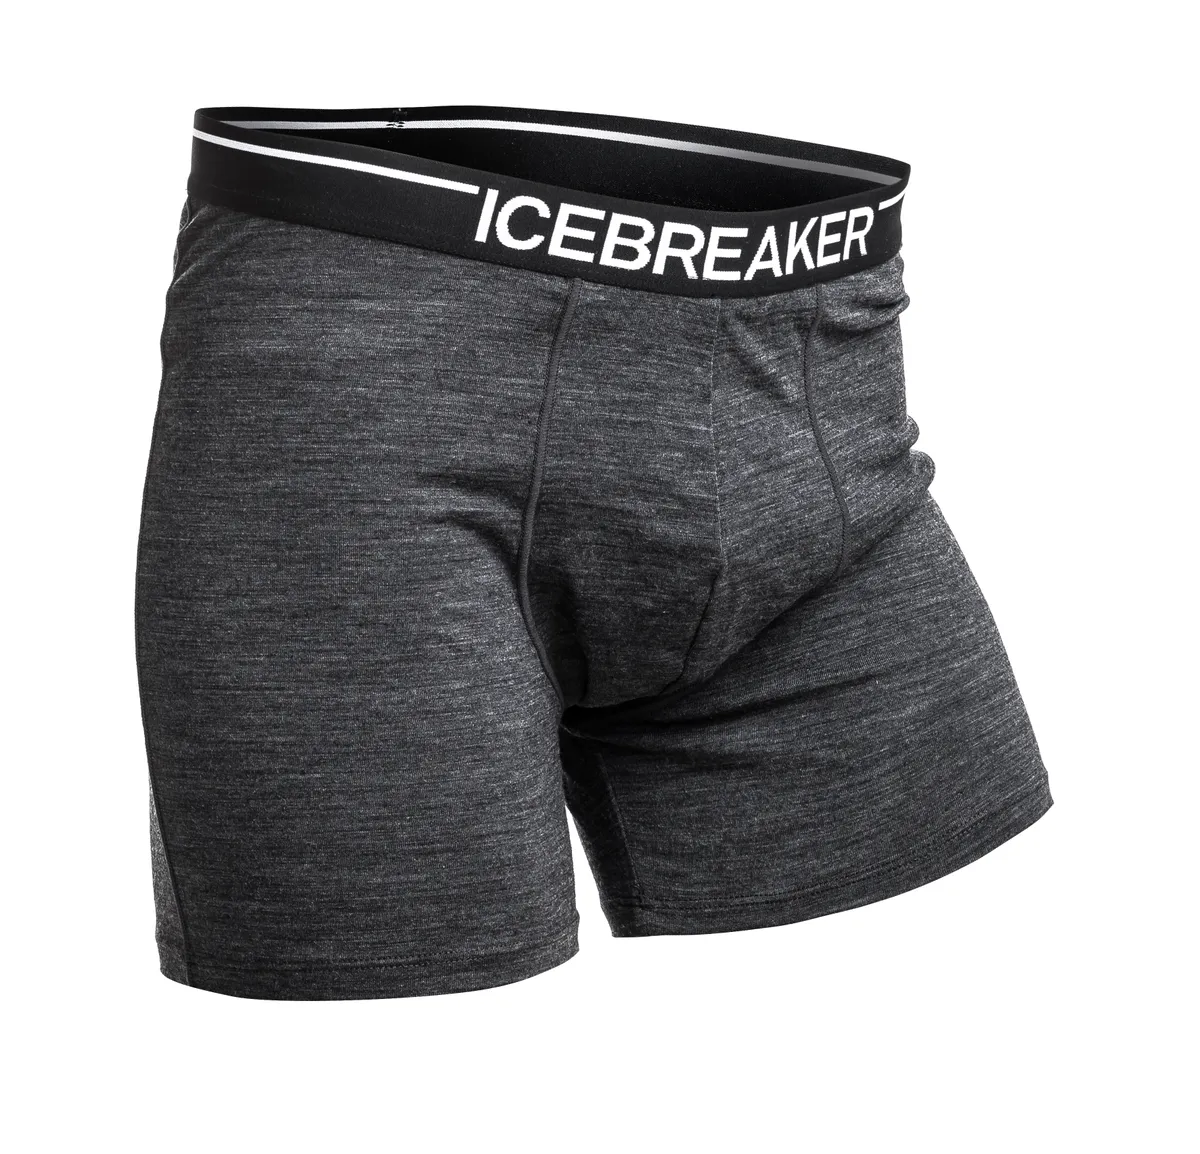 Icebreaker Anatomica boxers